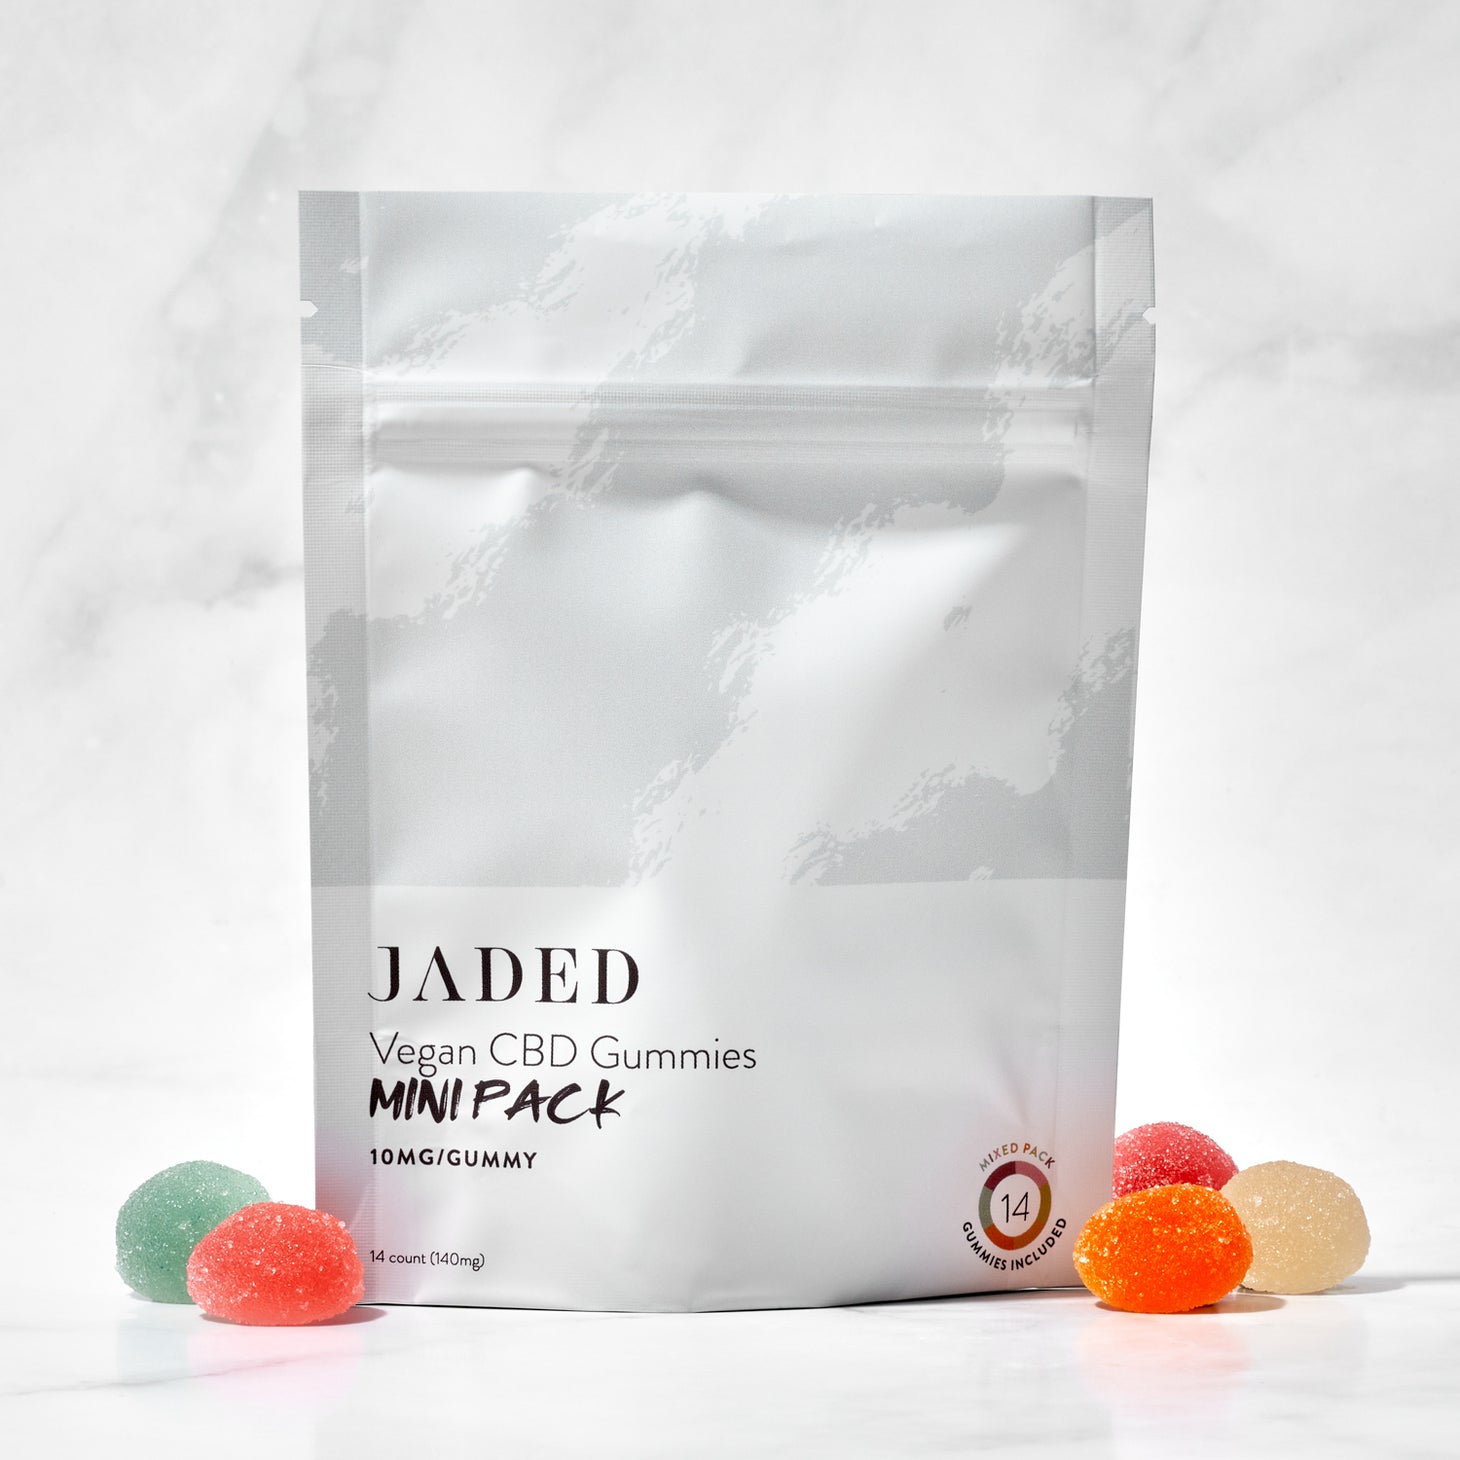 JADED Vegan CBD Gummies Mini Pack 14 count